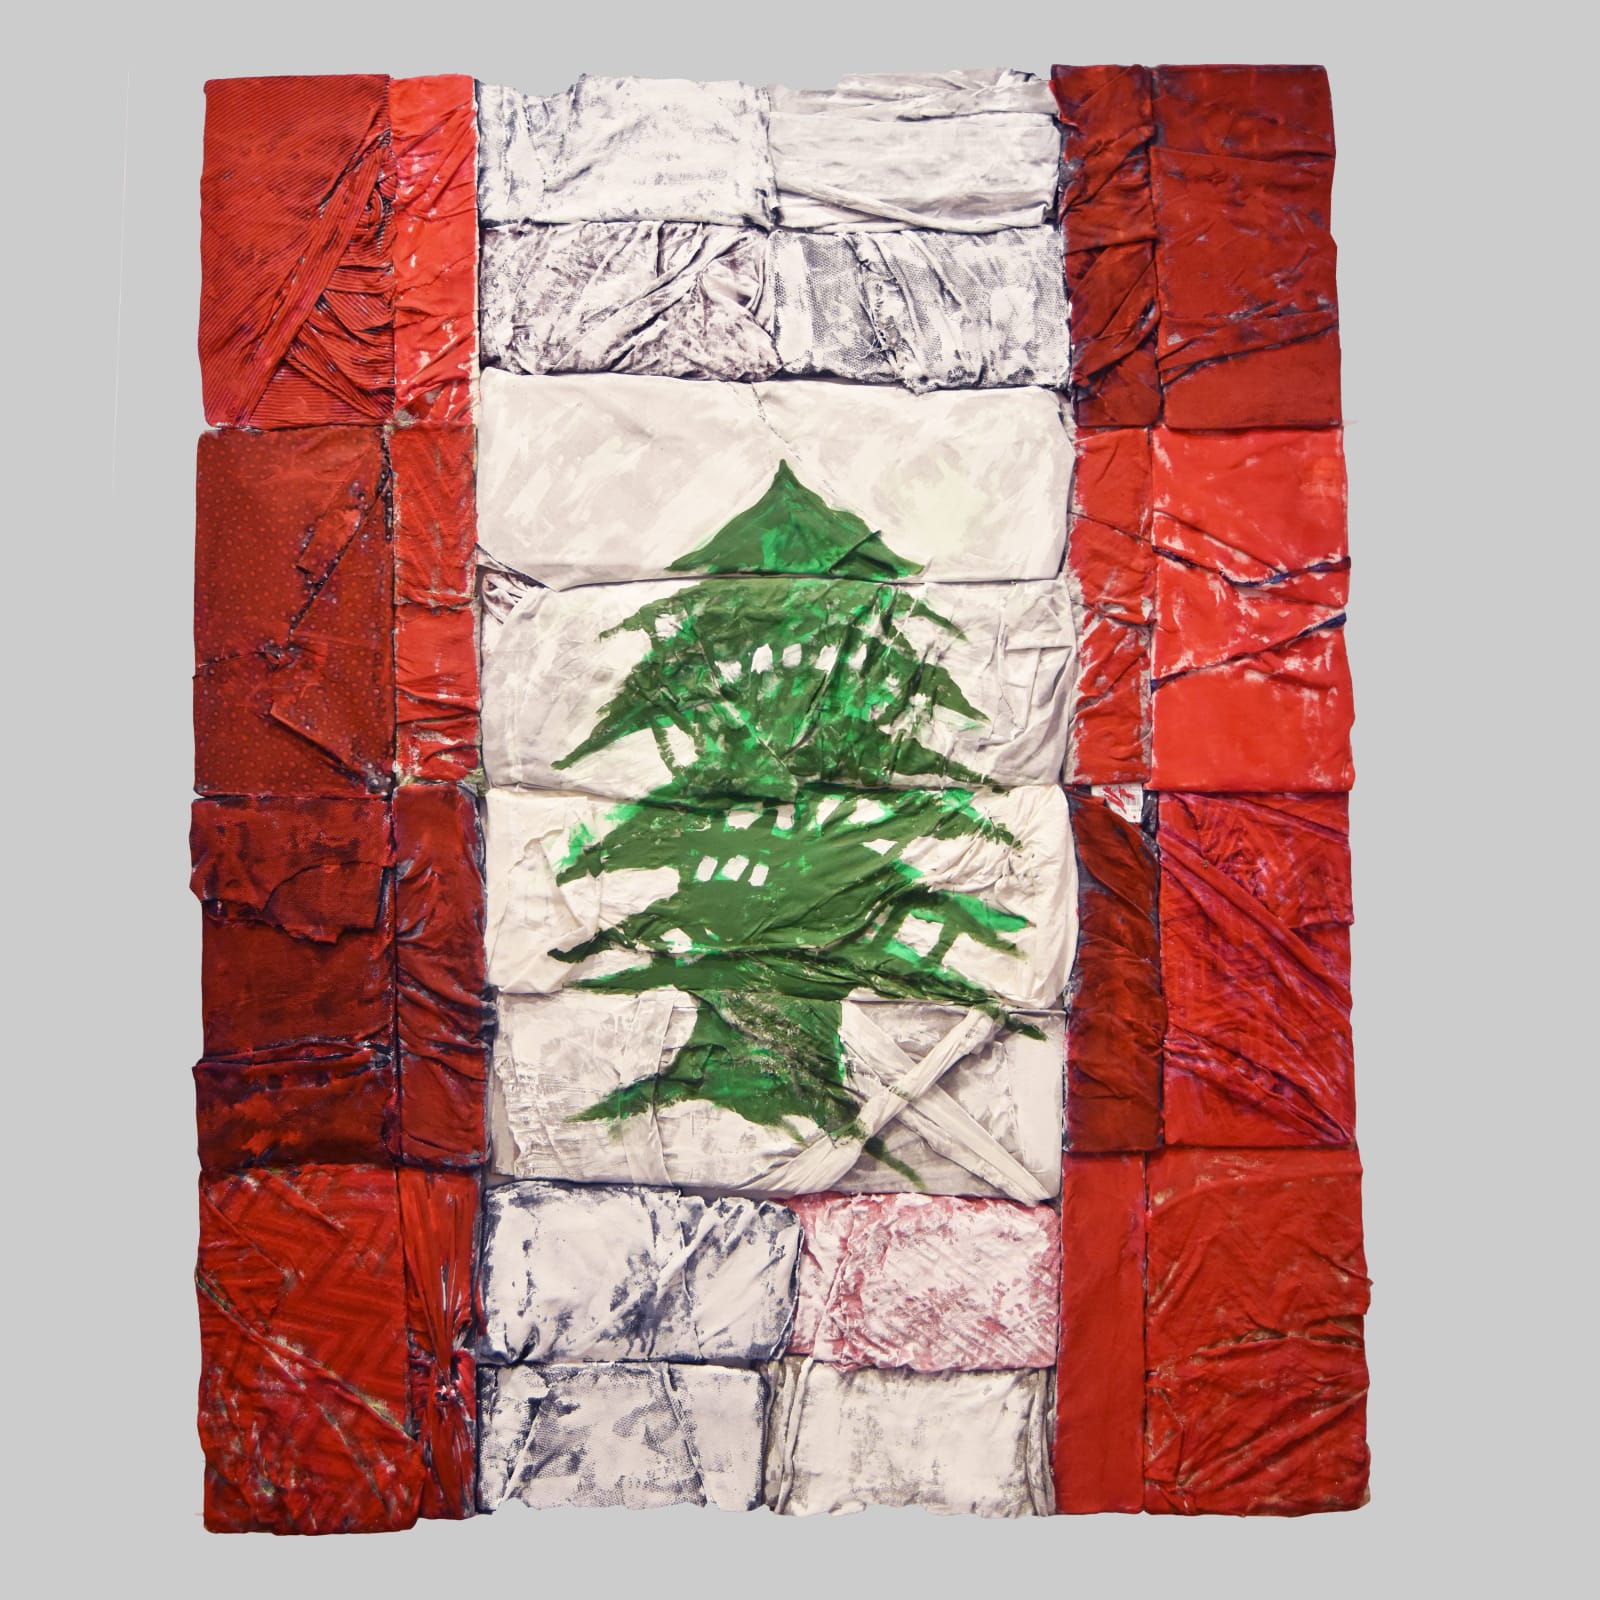 Mario Arlati, Incomplete Flag, Libano, 2019